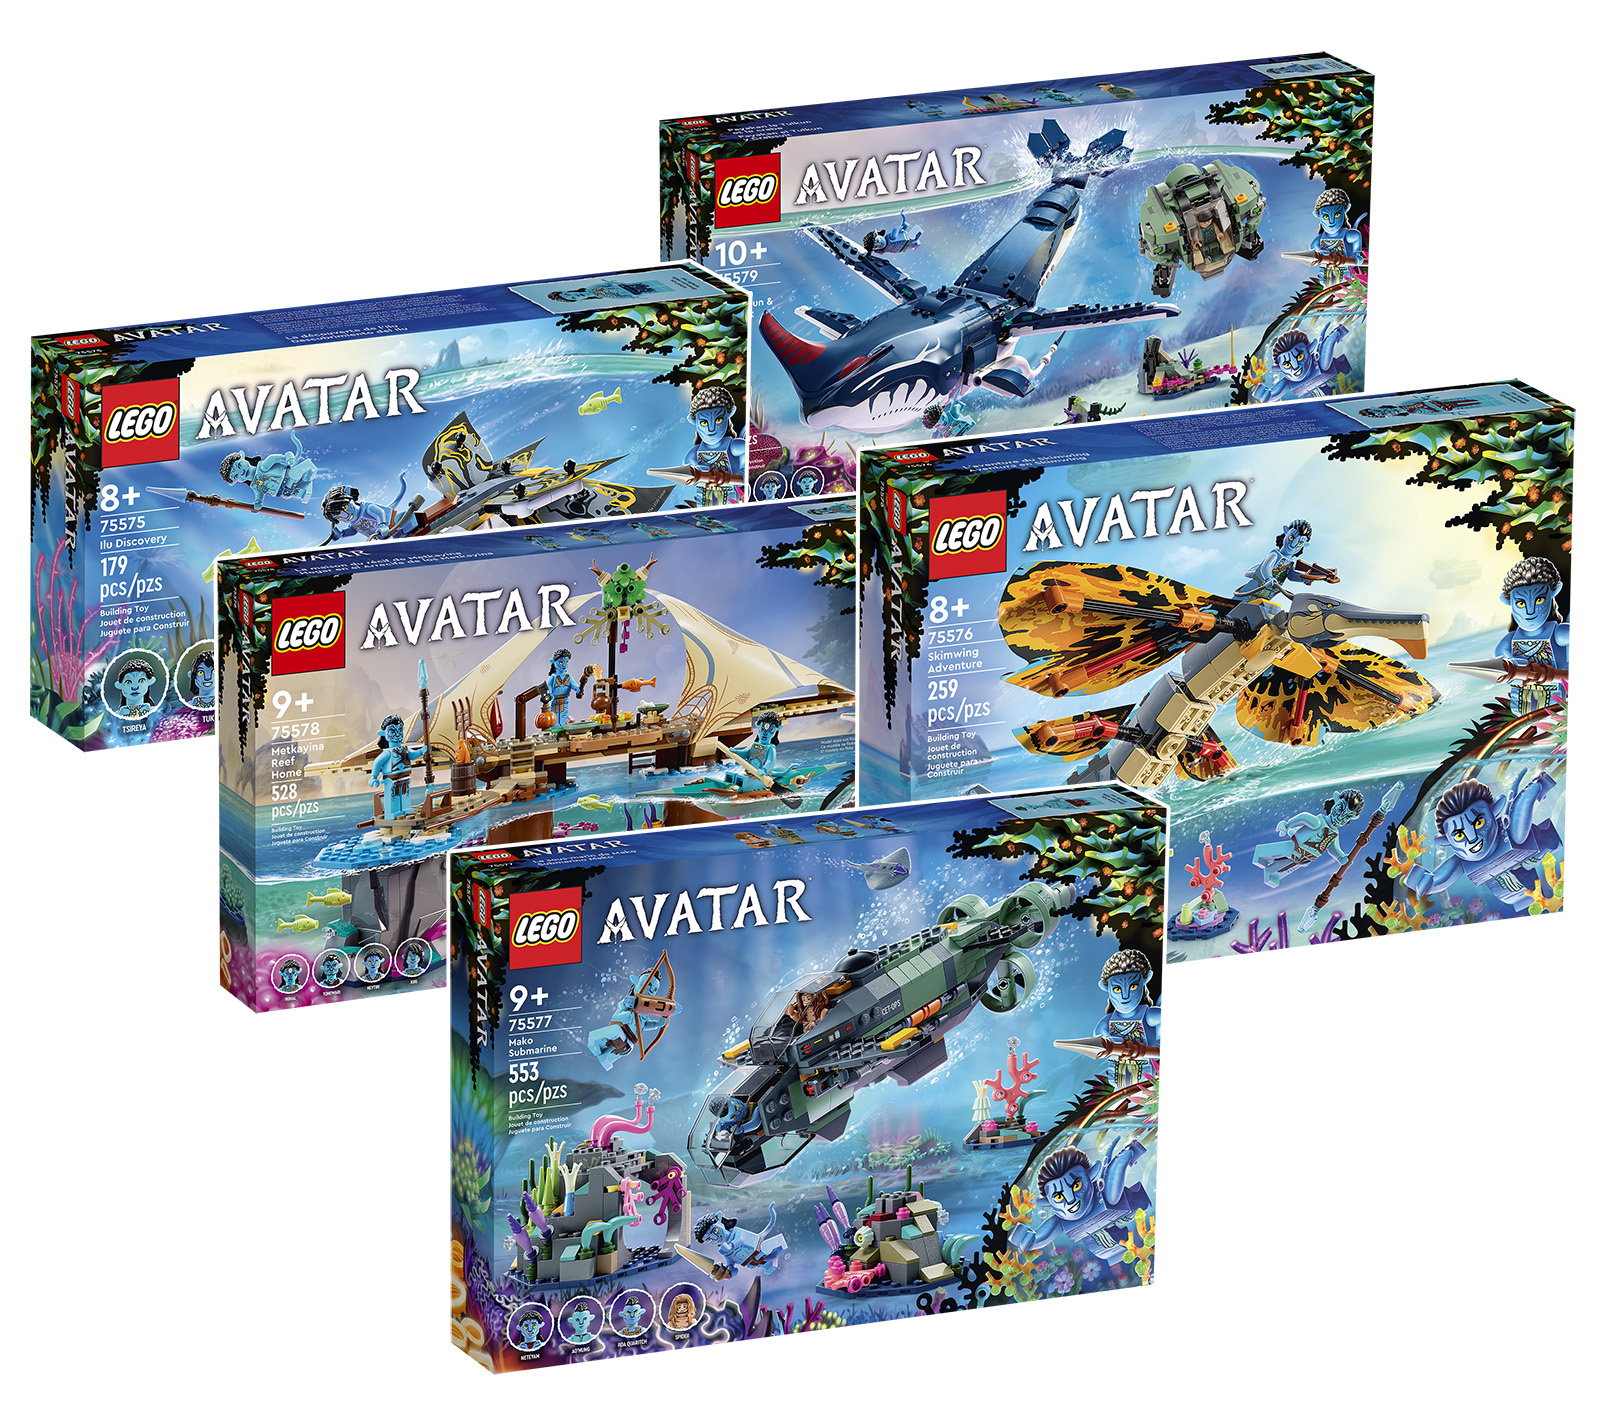 New LEGO Avatar Way of the Water 2023 sets revealed! - Jay's Brick